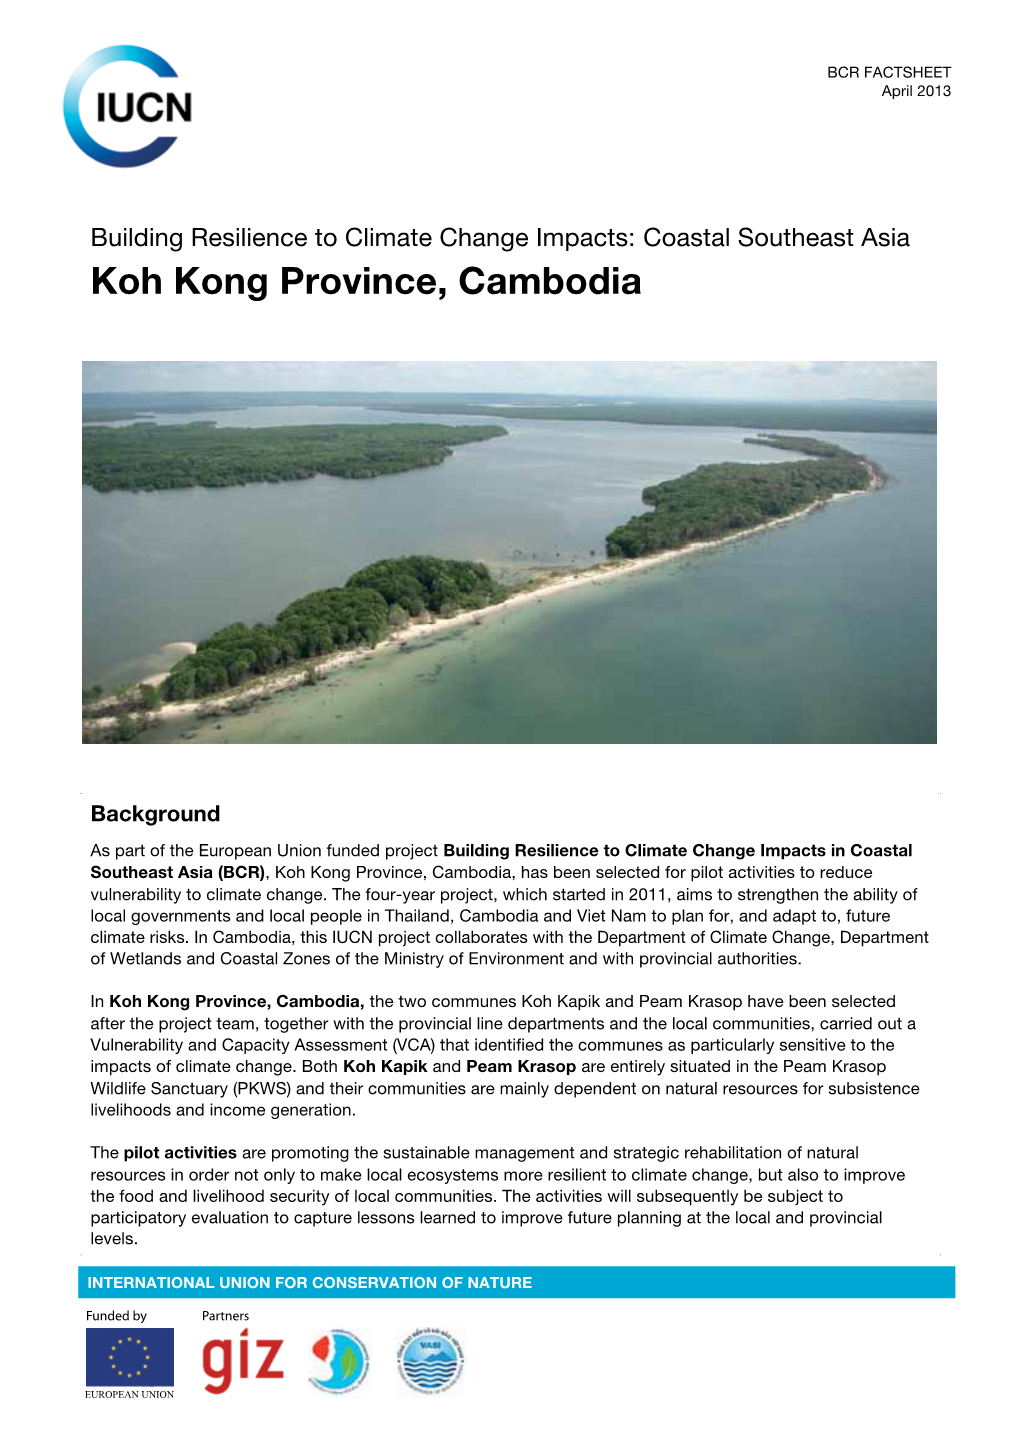 Koh Kong Province, Cambodia